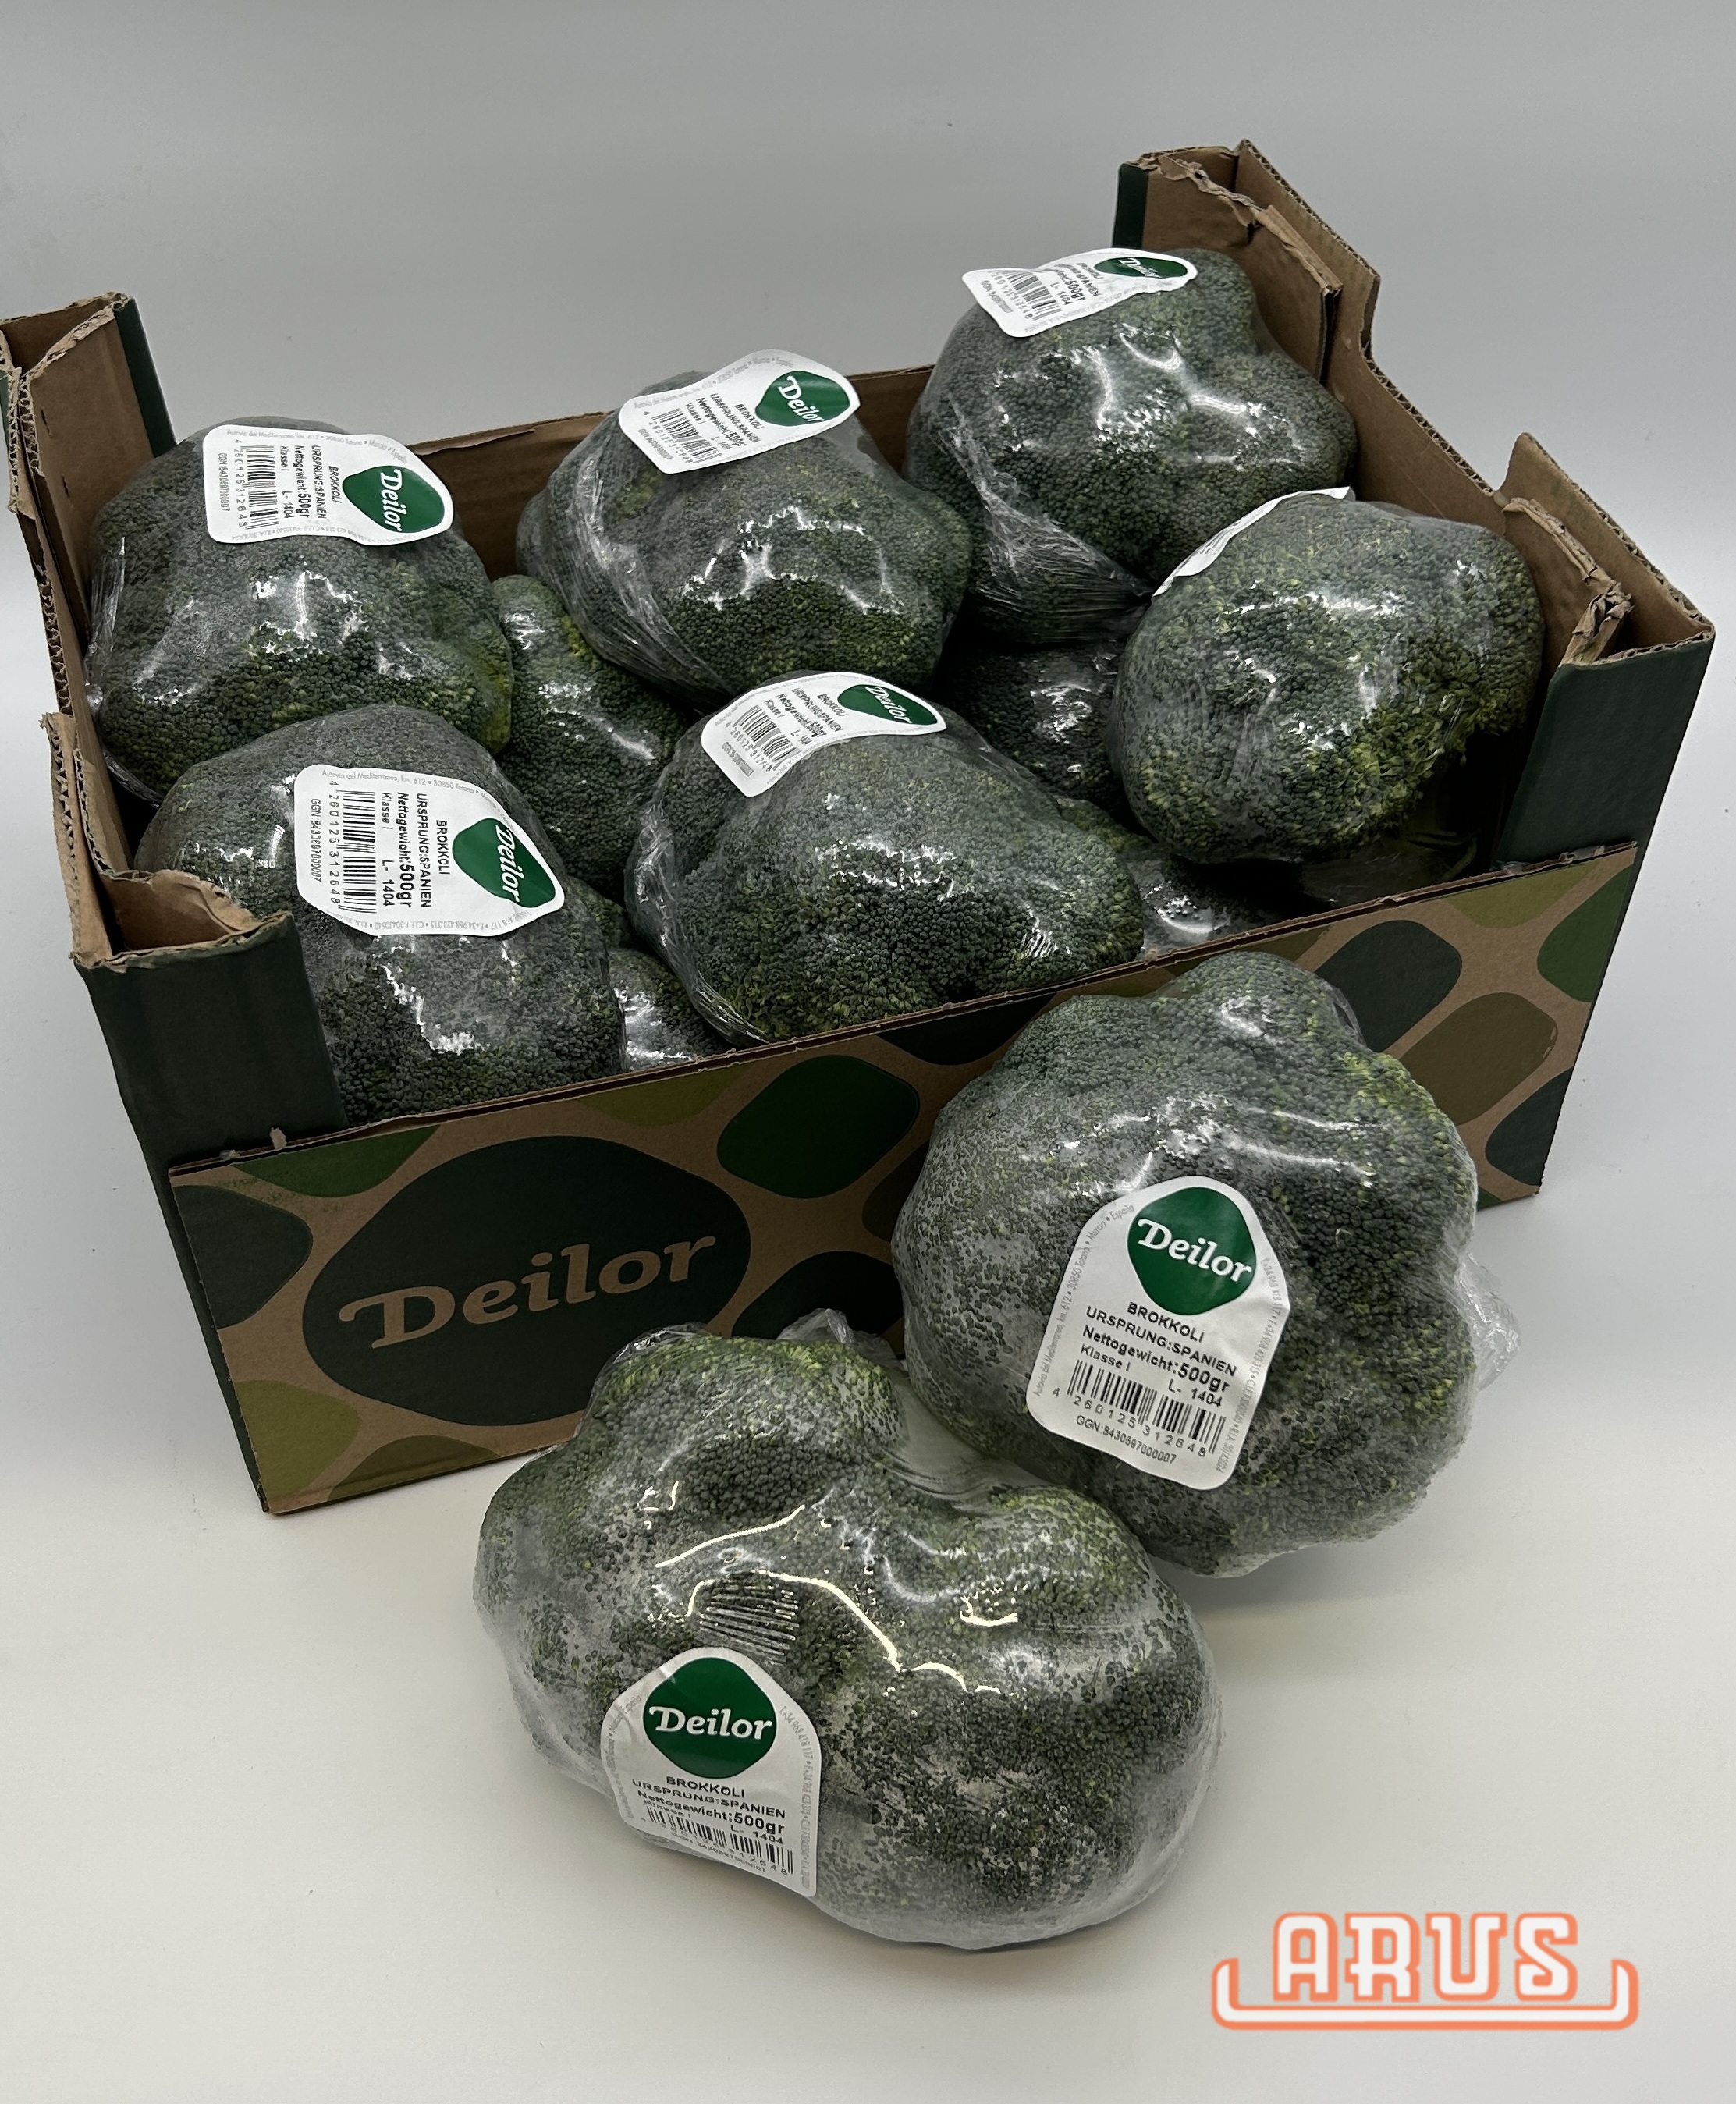 Broccoli "gepackt" 12x500g - Poly -